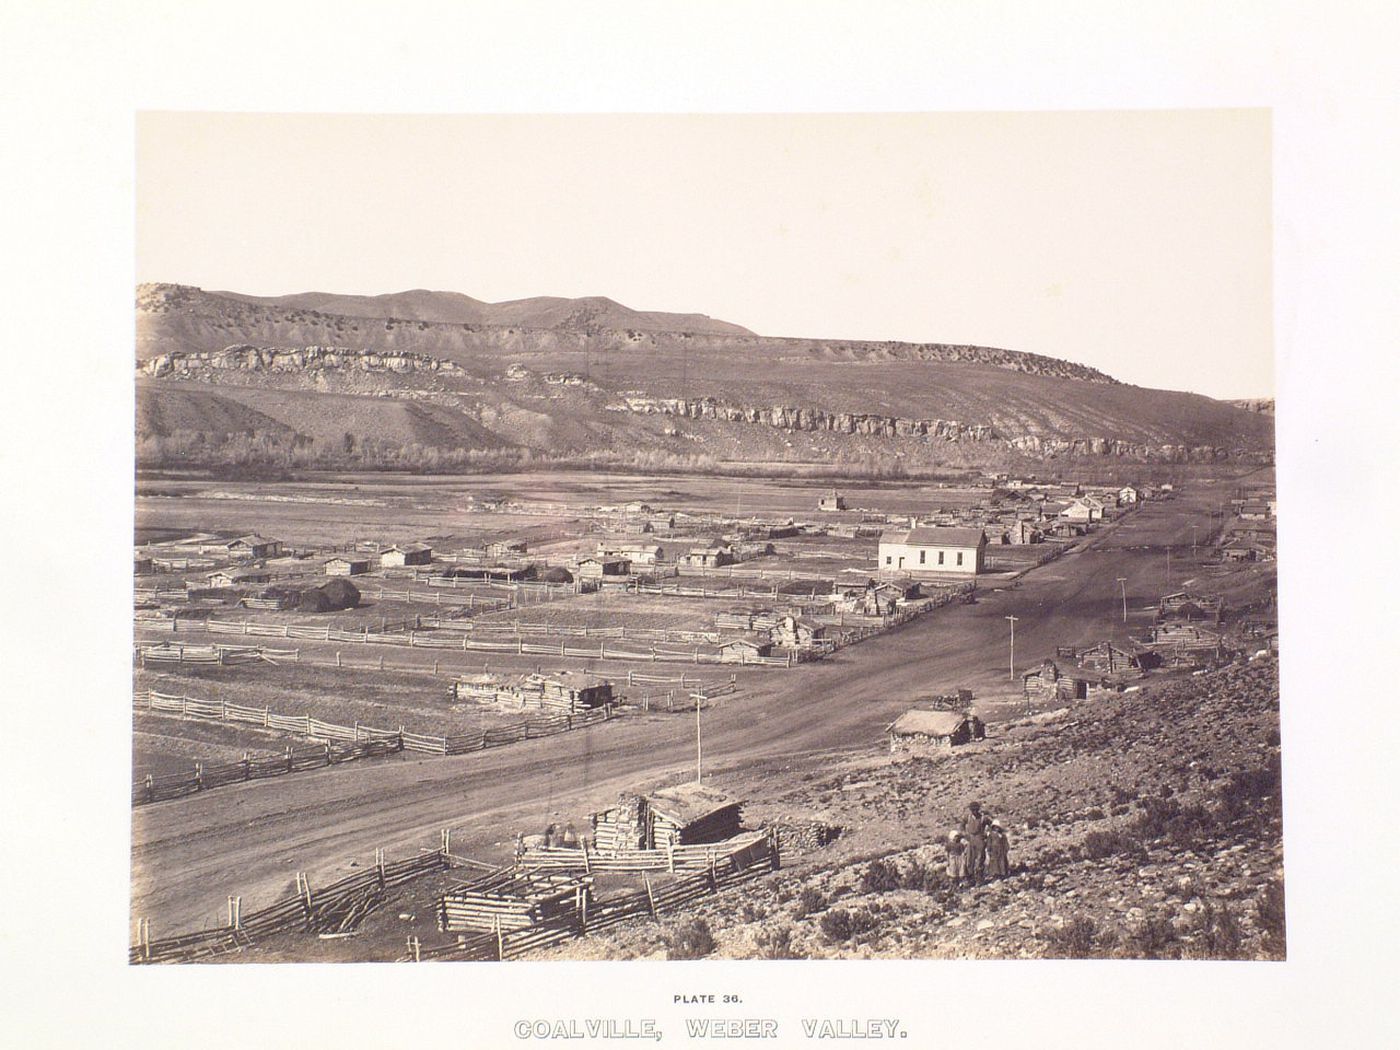 Small settlement off road, Coalville, Utah